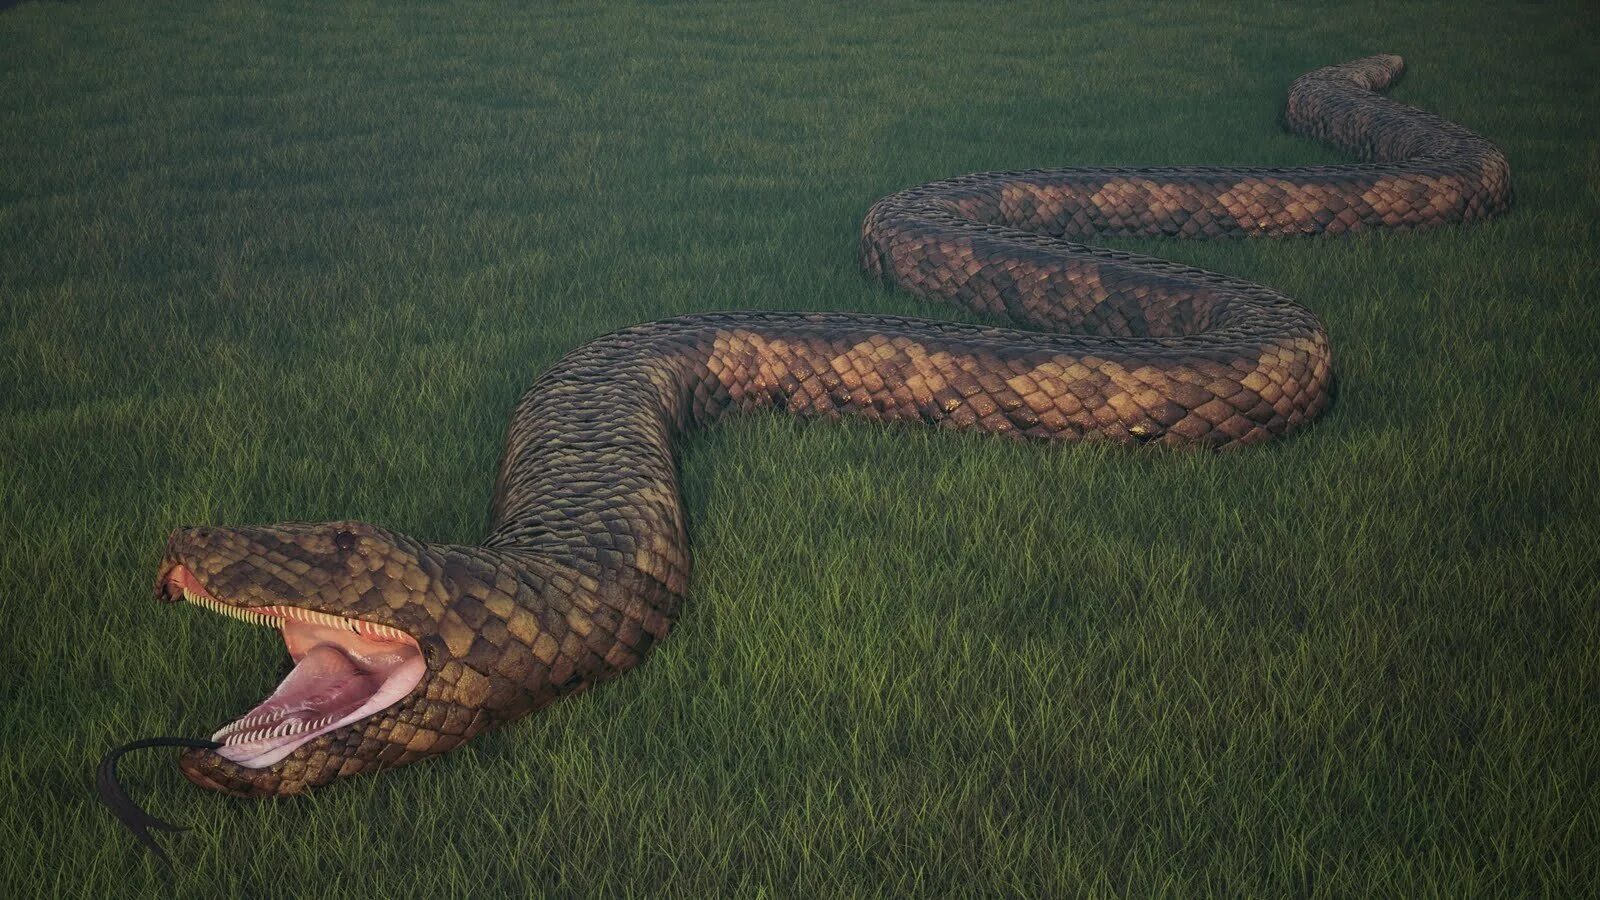 Анаконда дата выхода. Анаконда змея. Река Амазонка змея Анаконда. Самая большая змея в мире Анаконда. ТИТАНОБОА змея и Анаконда.